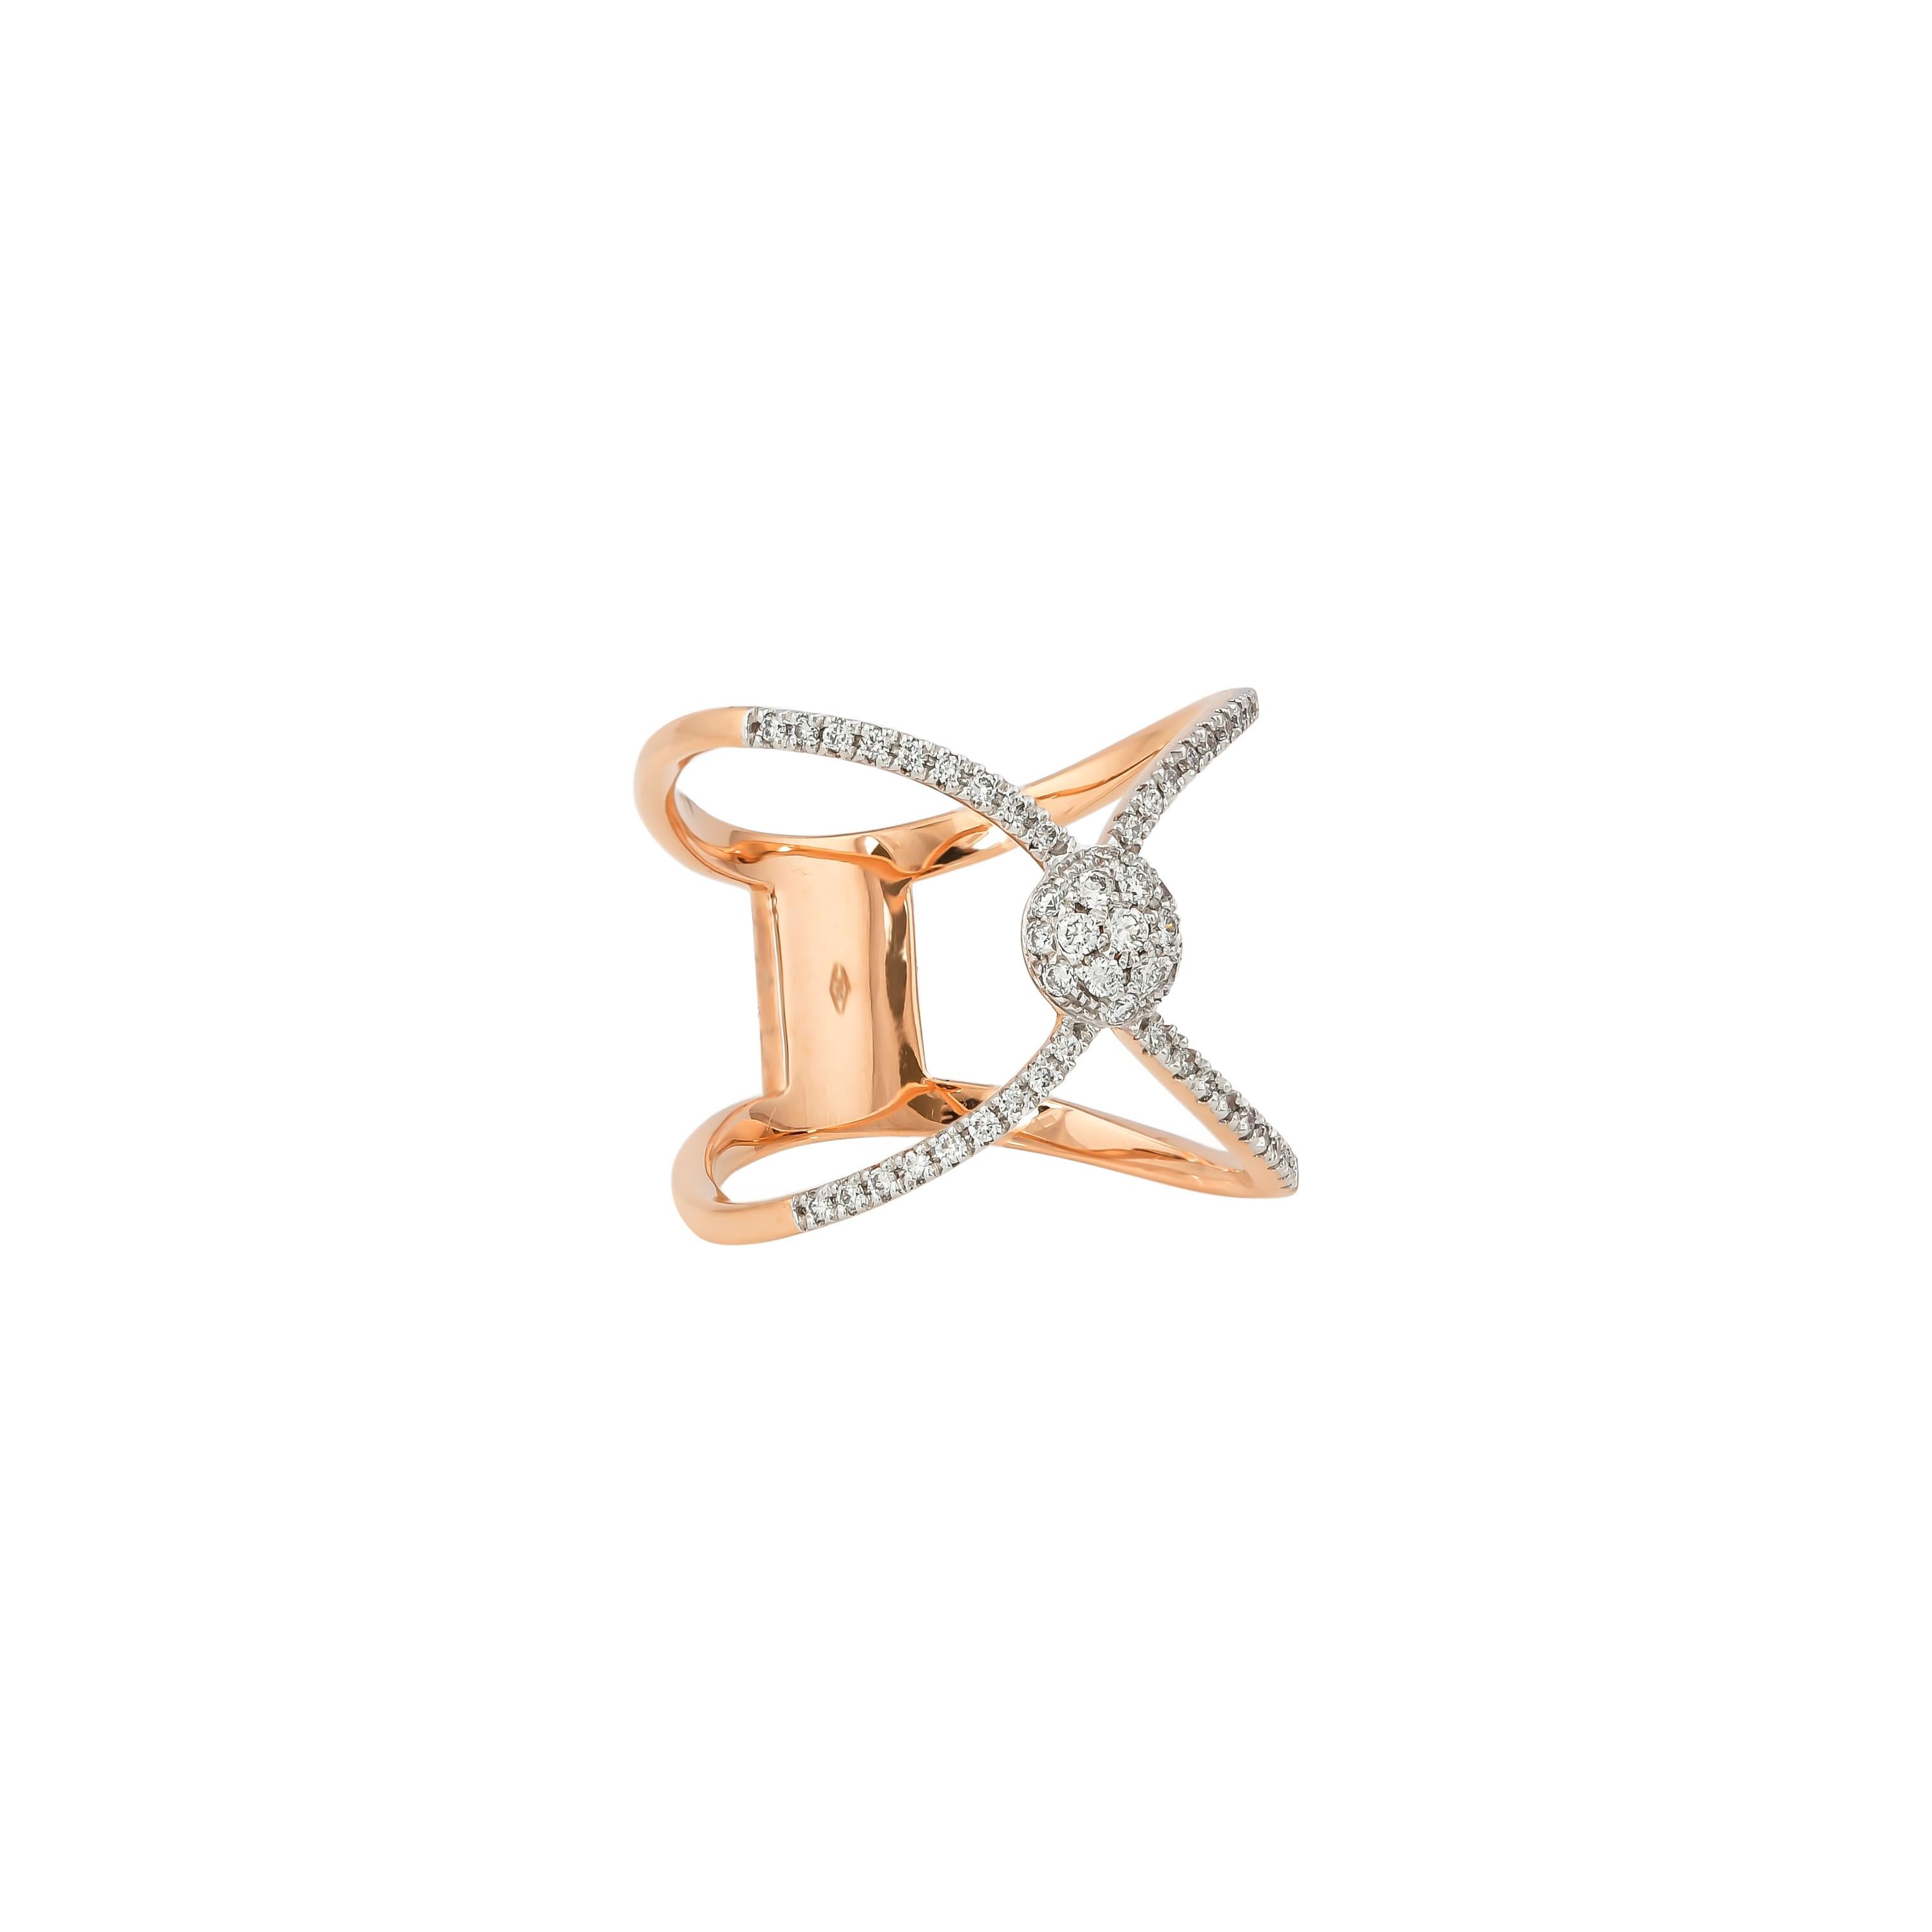 Unique and Designer Cocktail Rings by Sunita Nahata Fine Design.

Classic Diamond ring in 18K Rose gold. 

Diamond: 0.016 carat, 1.60mm size, round shape, G colour, VS clarity.
Diamond: 0.056 carat, 1.30mm size, round shape, G colour, VS